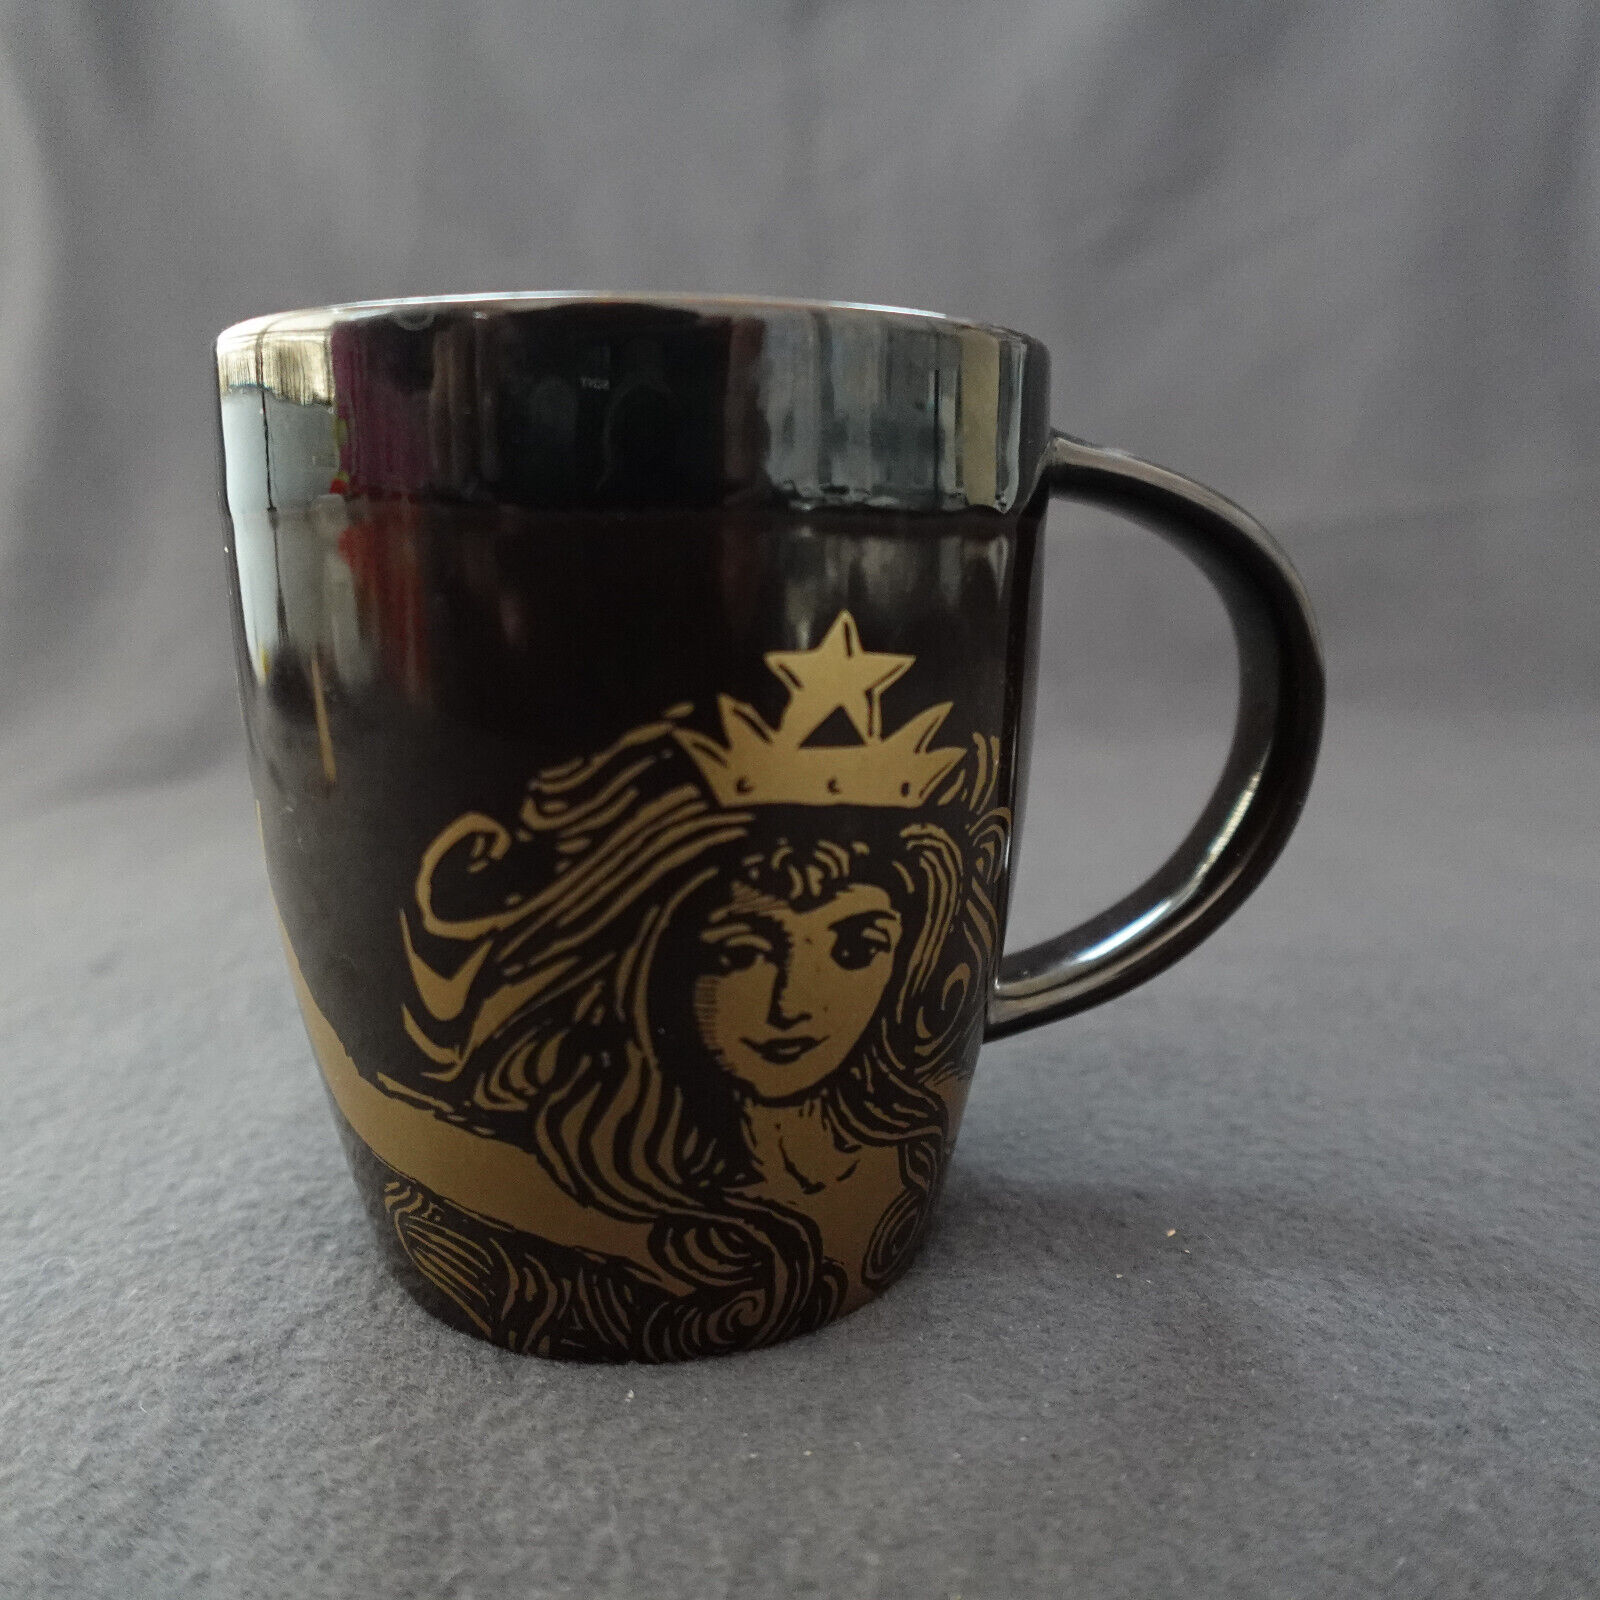 Starbucks Anniversary Mug Gold Mermaid Collection Coffee Cup 2012